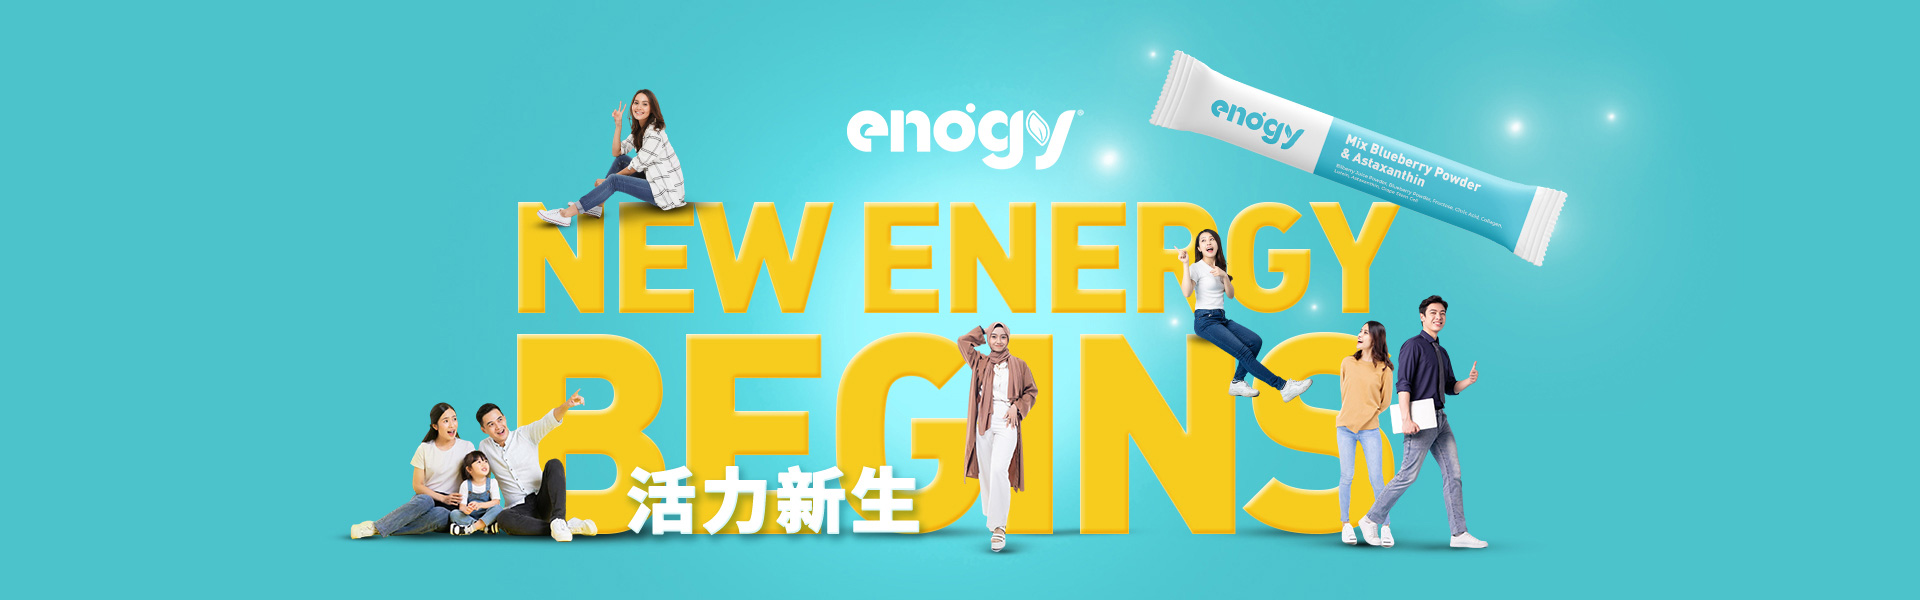 Enogy-New Energy Begins